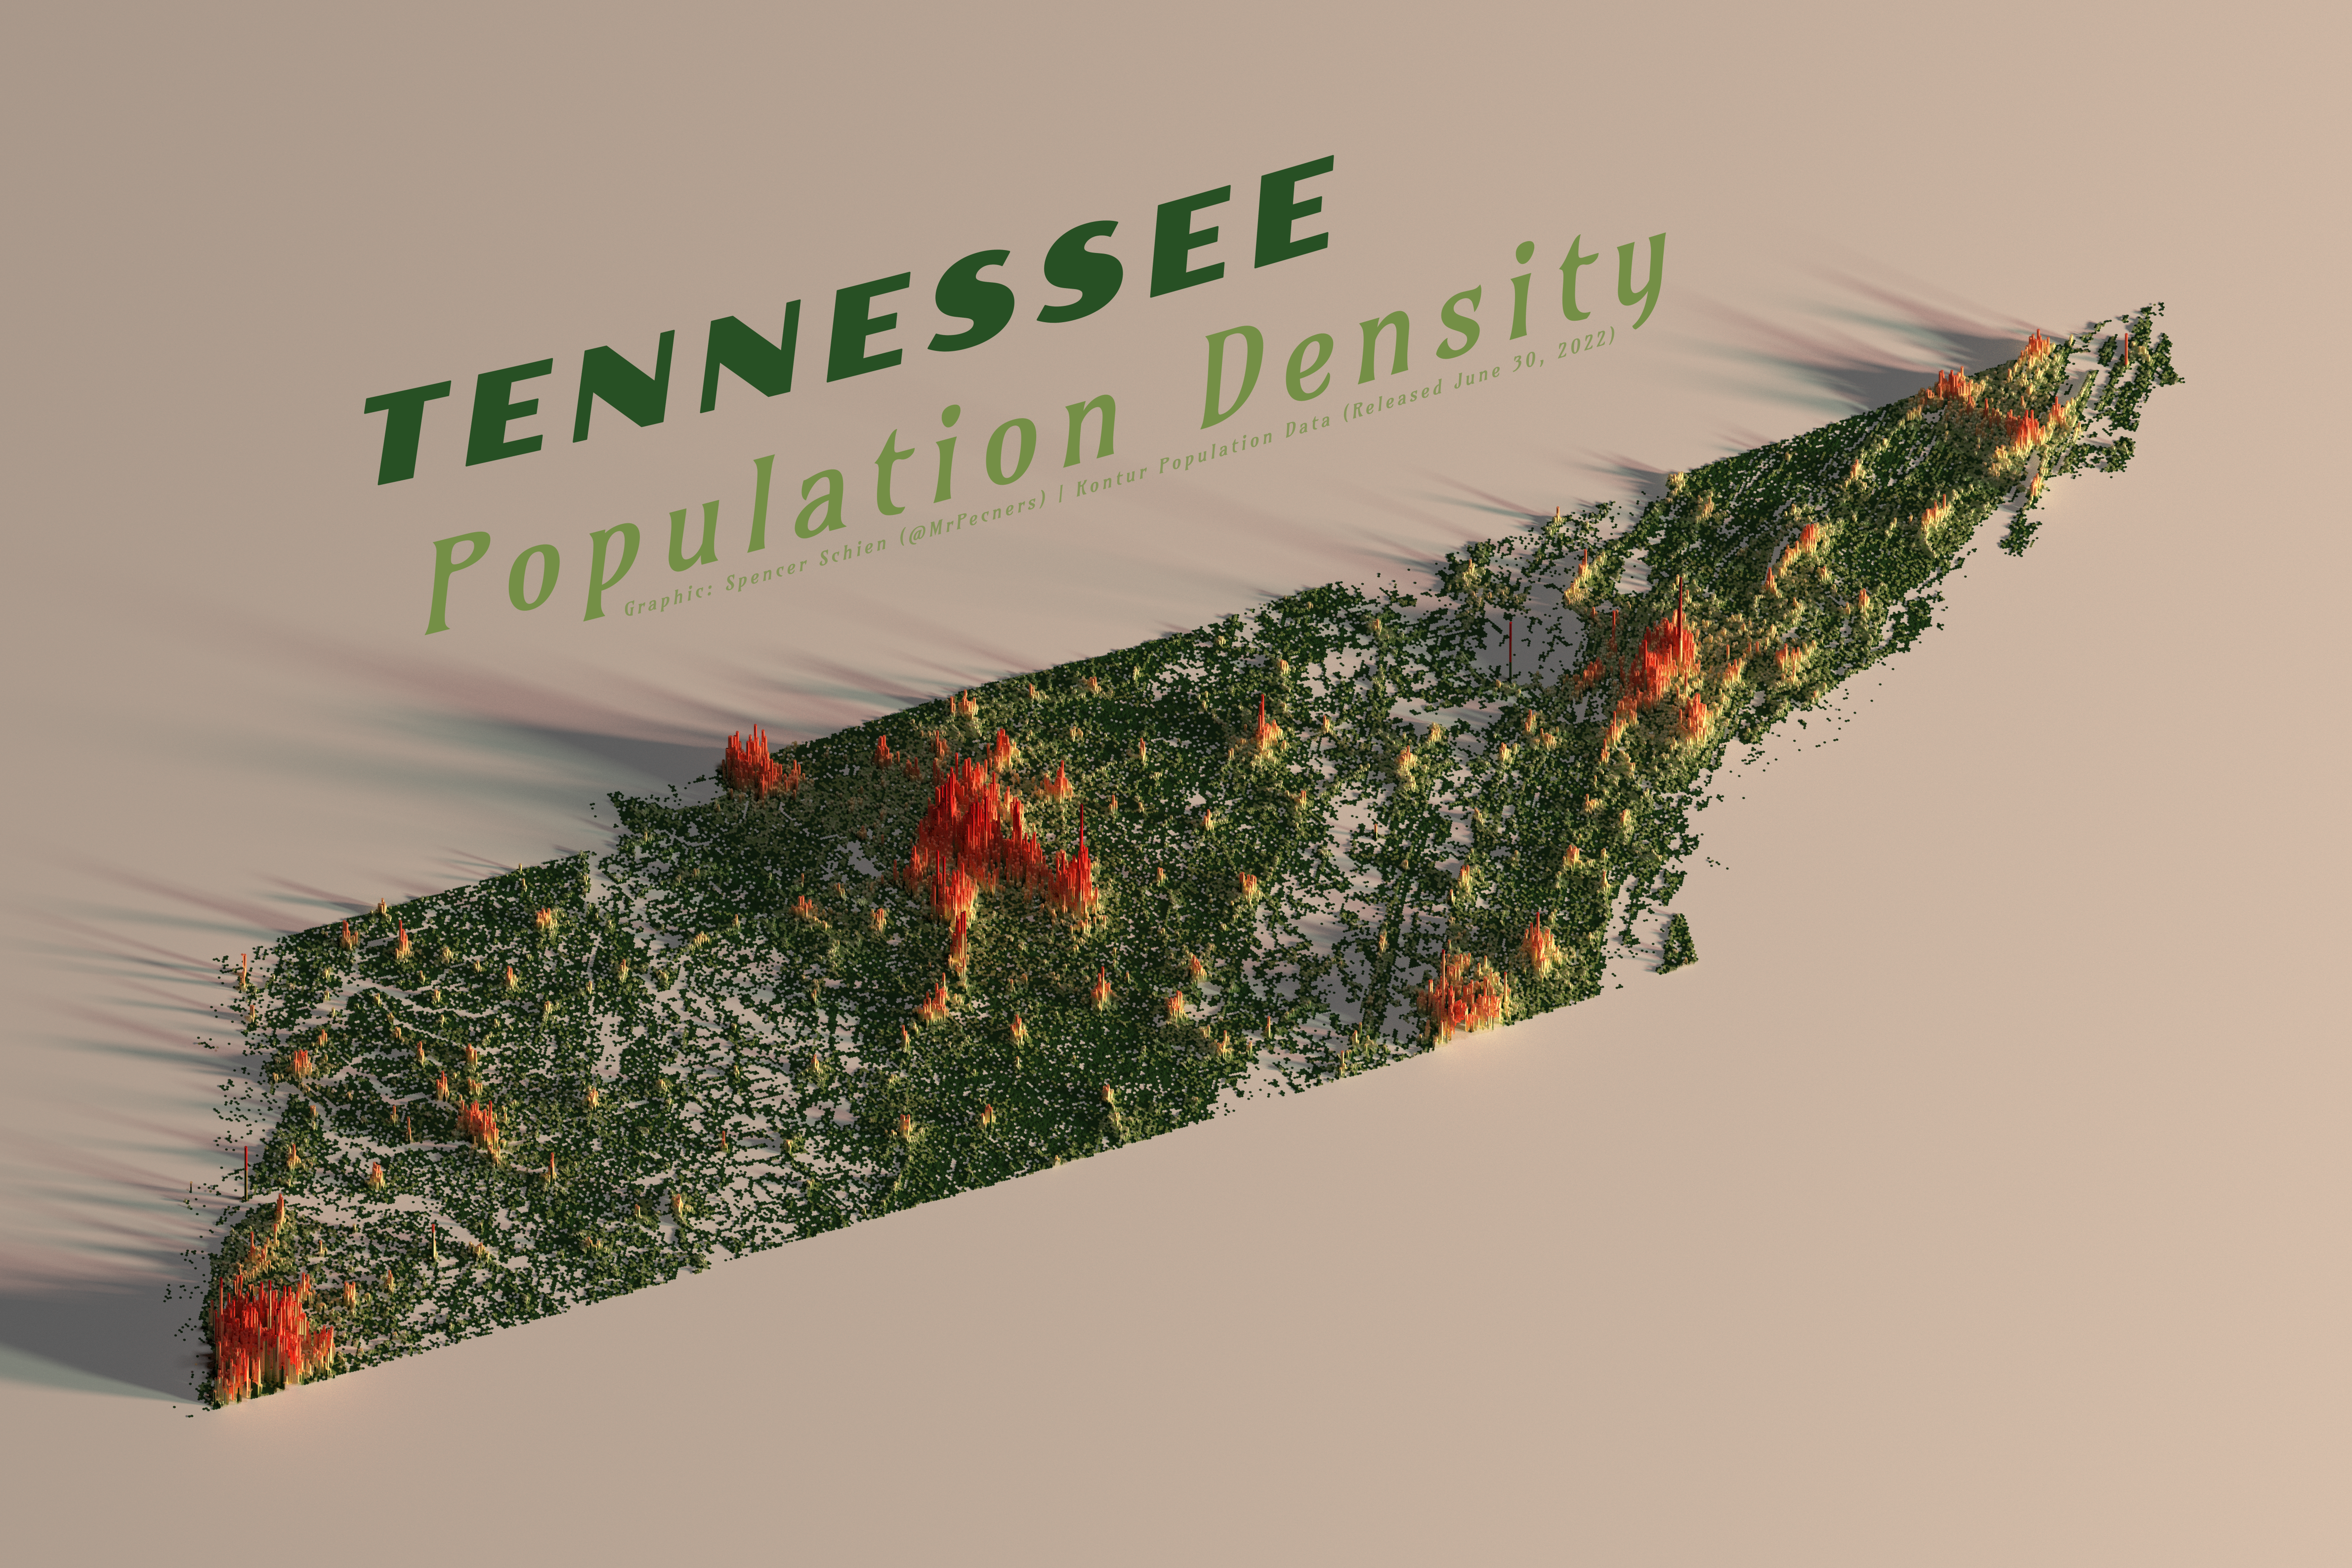 Tennessee Population Density